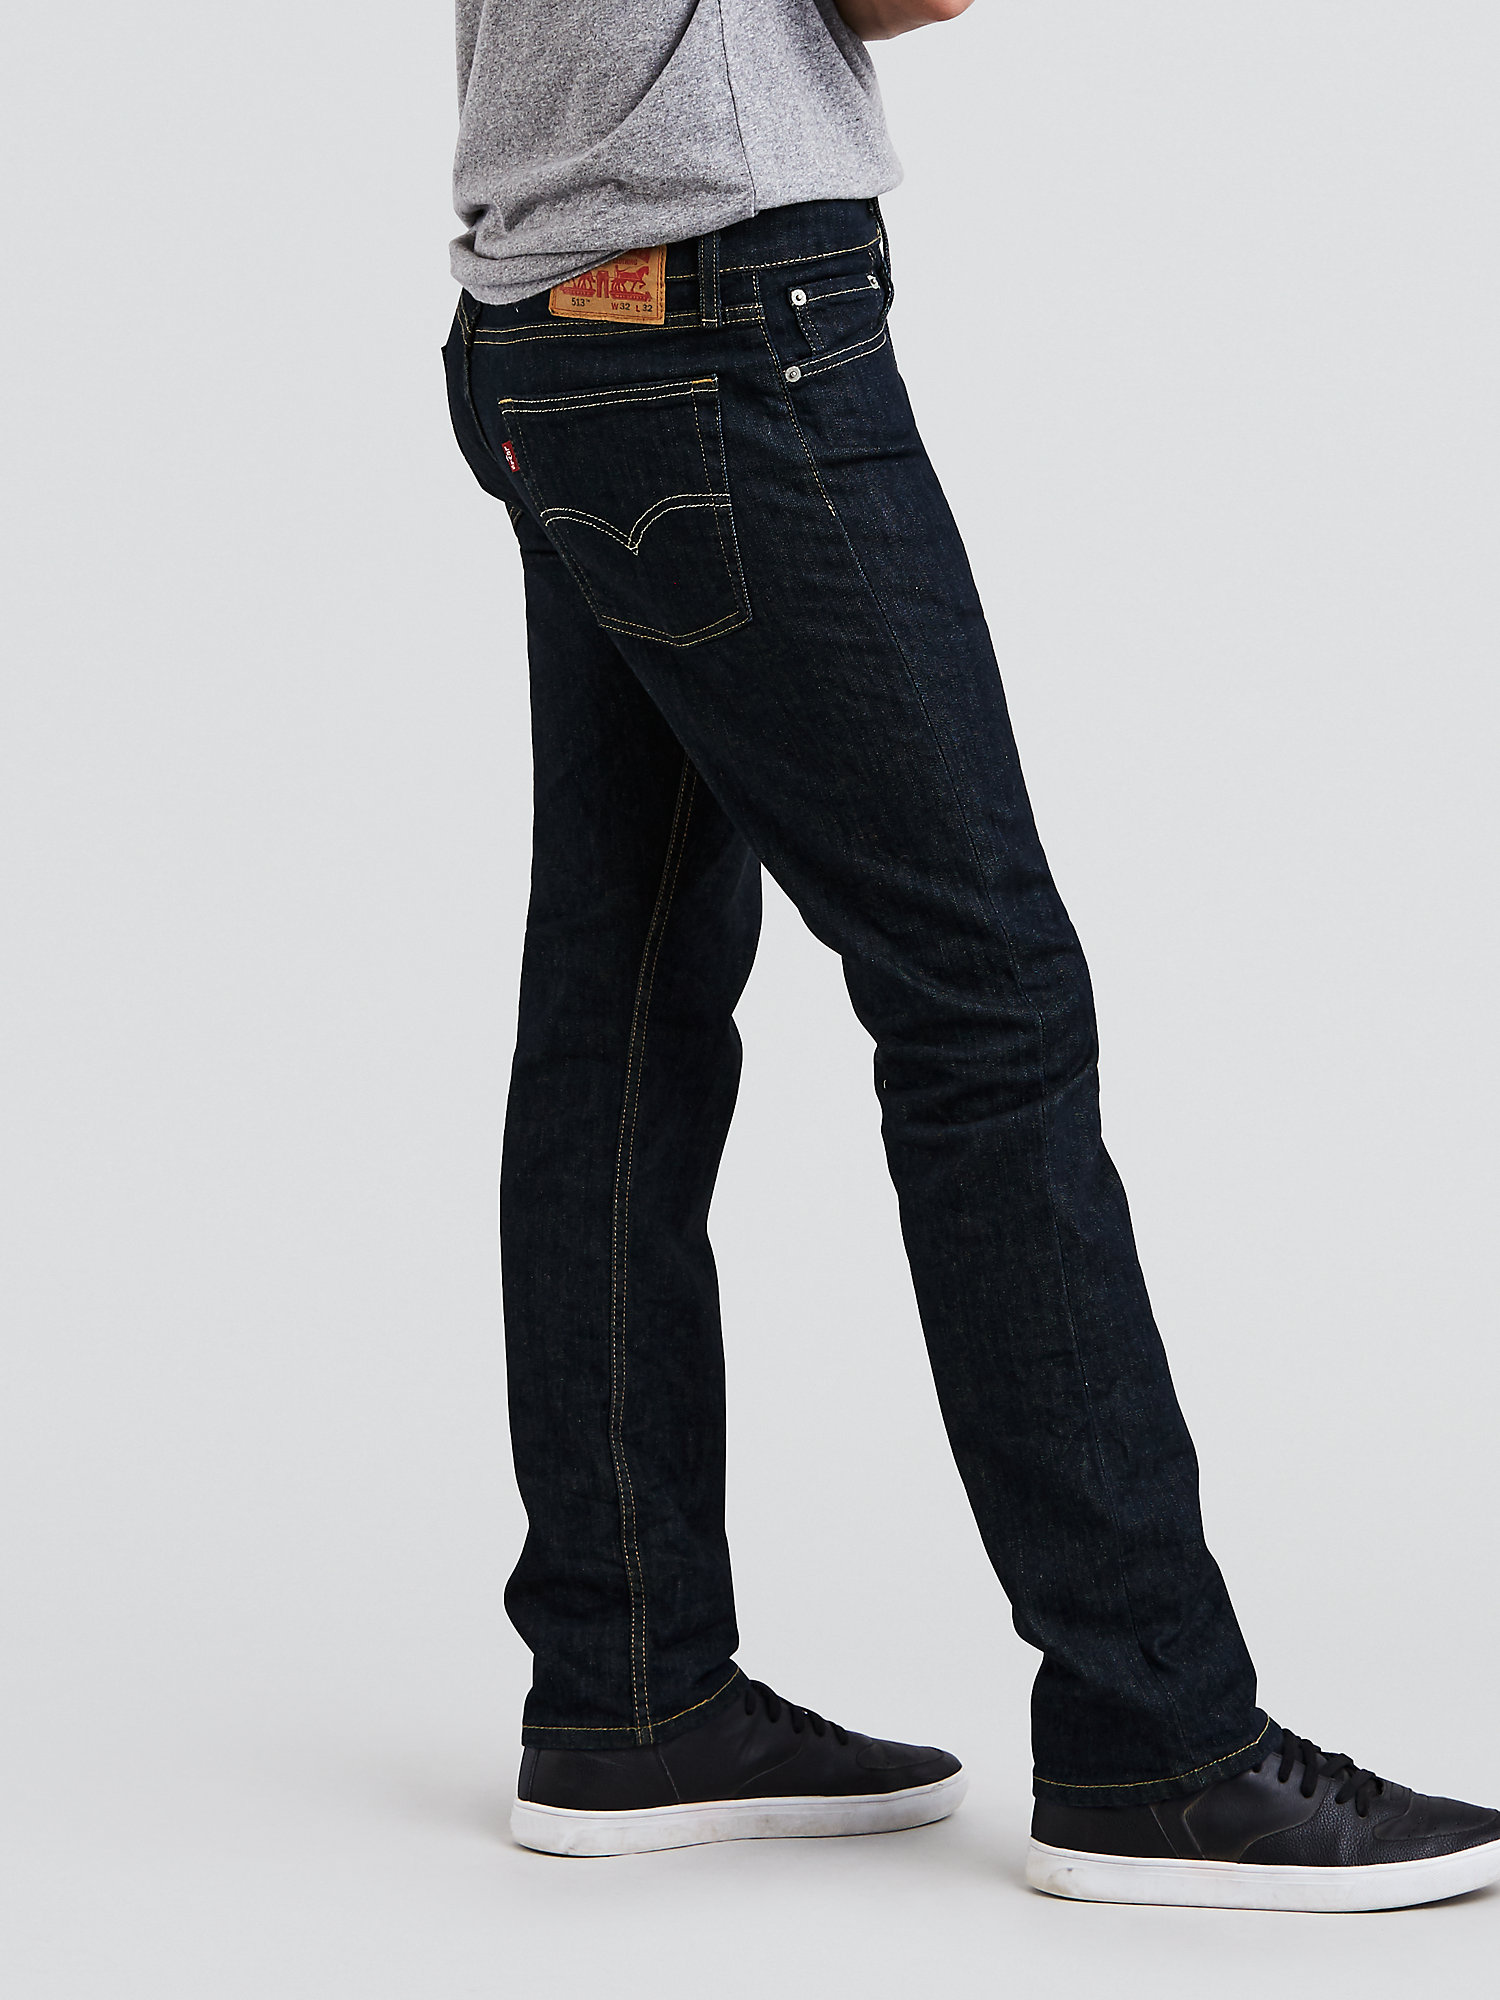 Levi's Men's 513 Slim Straight Fit Jeans - image 4 of 7